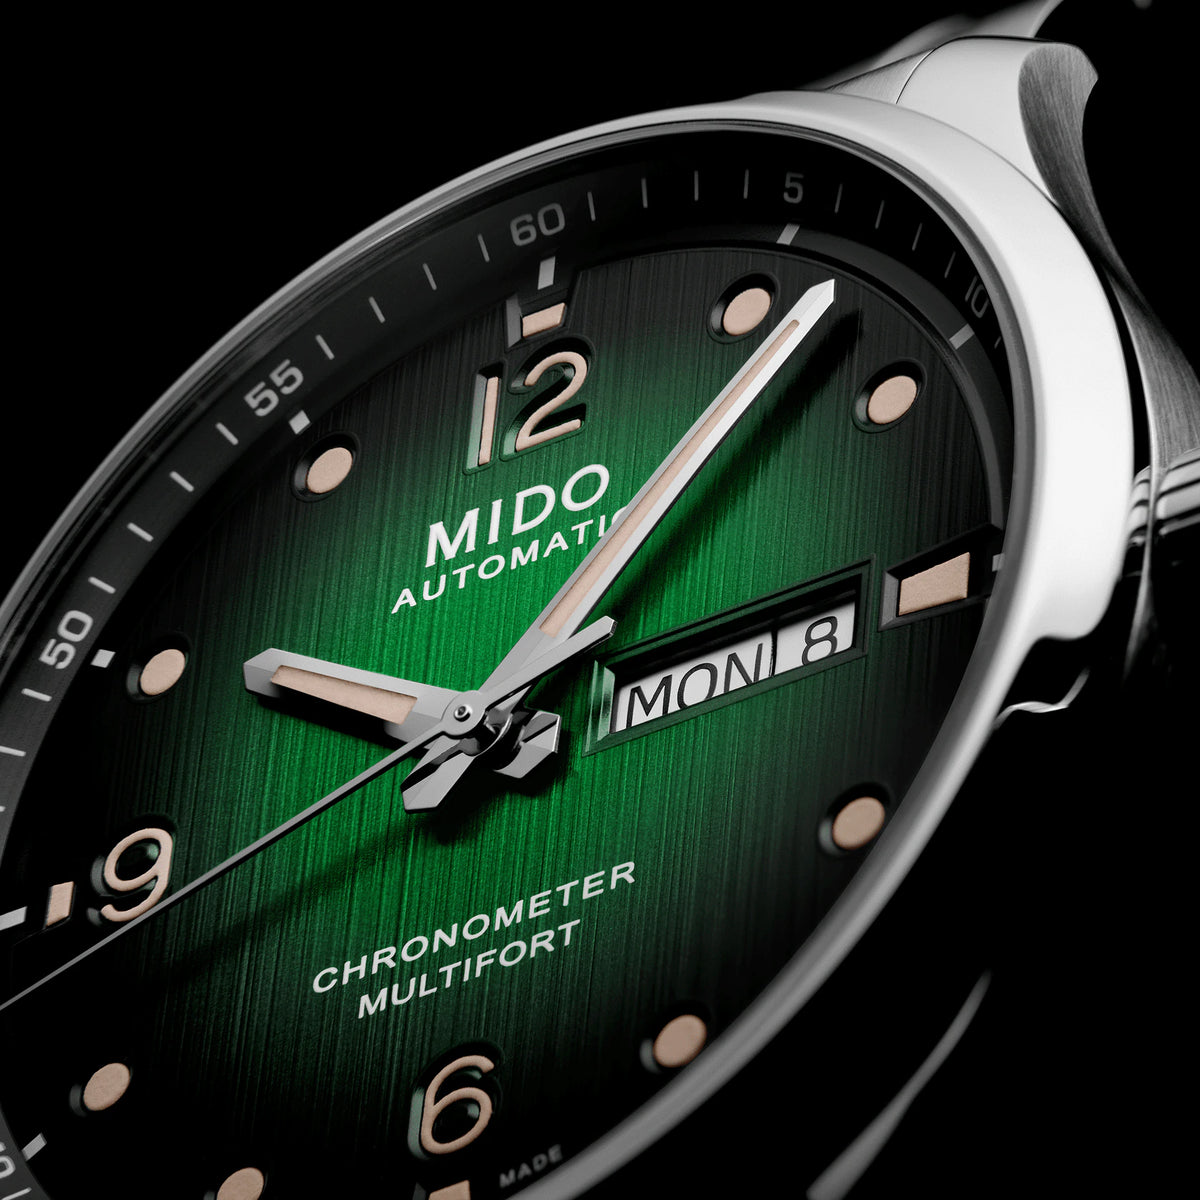 Mido Multifort M chronometer 42mm M038.431.11.097.00